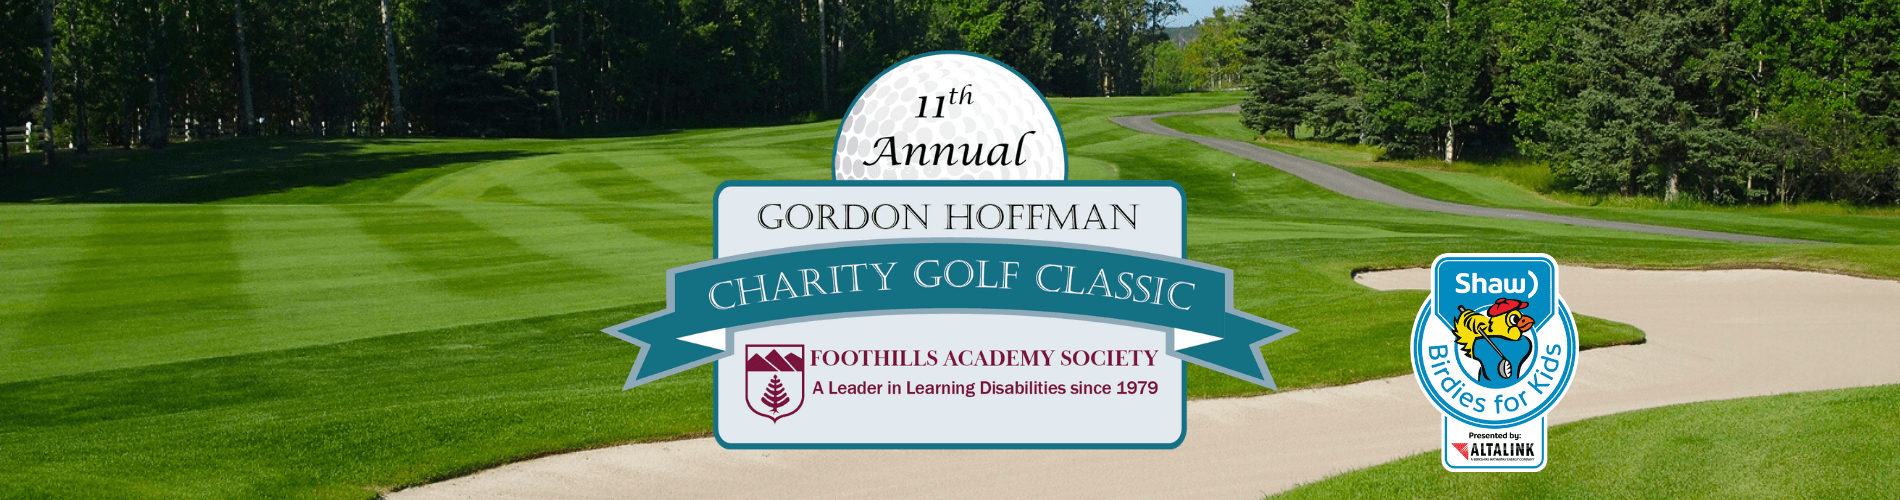 Banner for Gordon Hoffman Charity Golf Classic